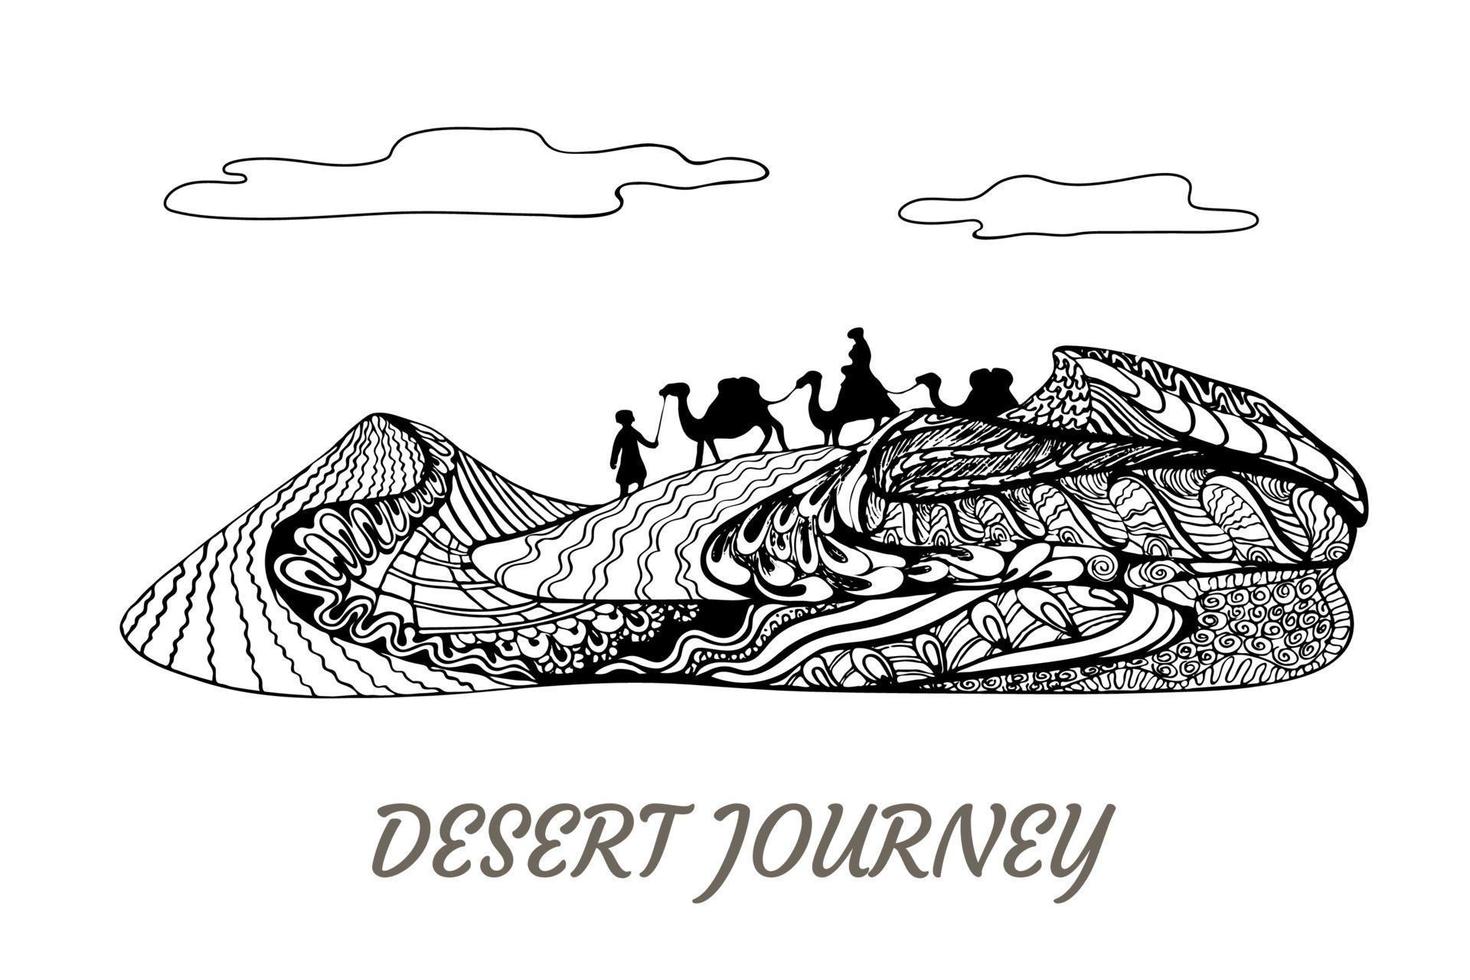 Desert journey, camels and cameleers walking on sand dune landscape. Ornate elegant zentangle concept art, horizontal black and white design for prints vector